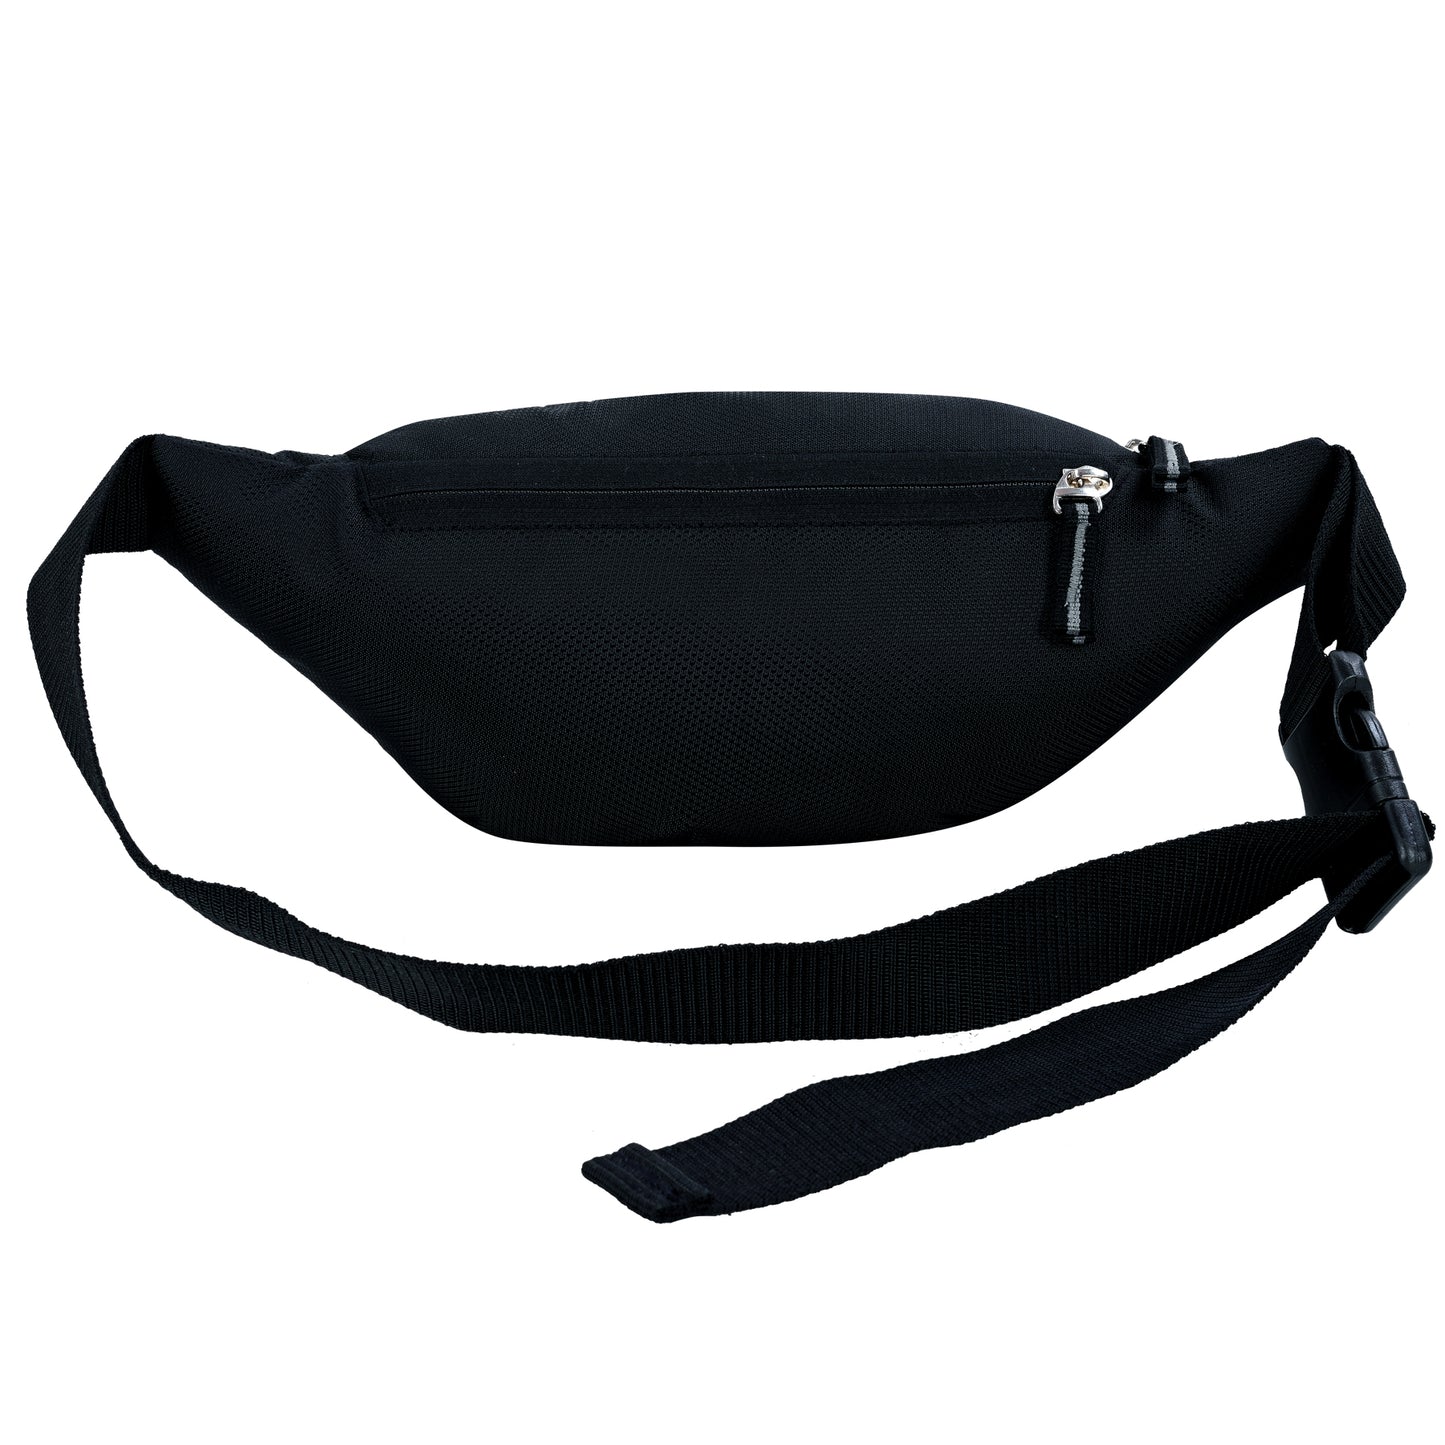 Leather World Waist Bag Travel waist Pouch Belt Sport Bag Bum Bag for Men and Women Nylon (Black)